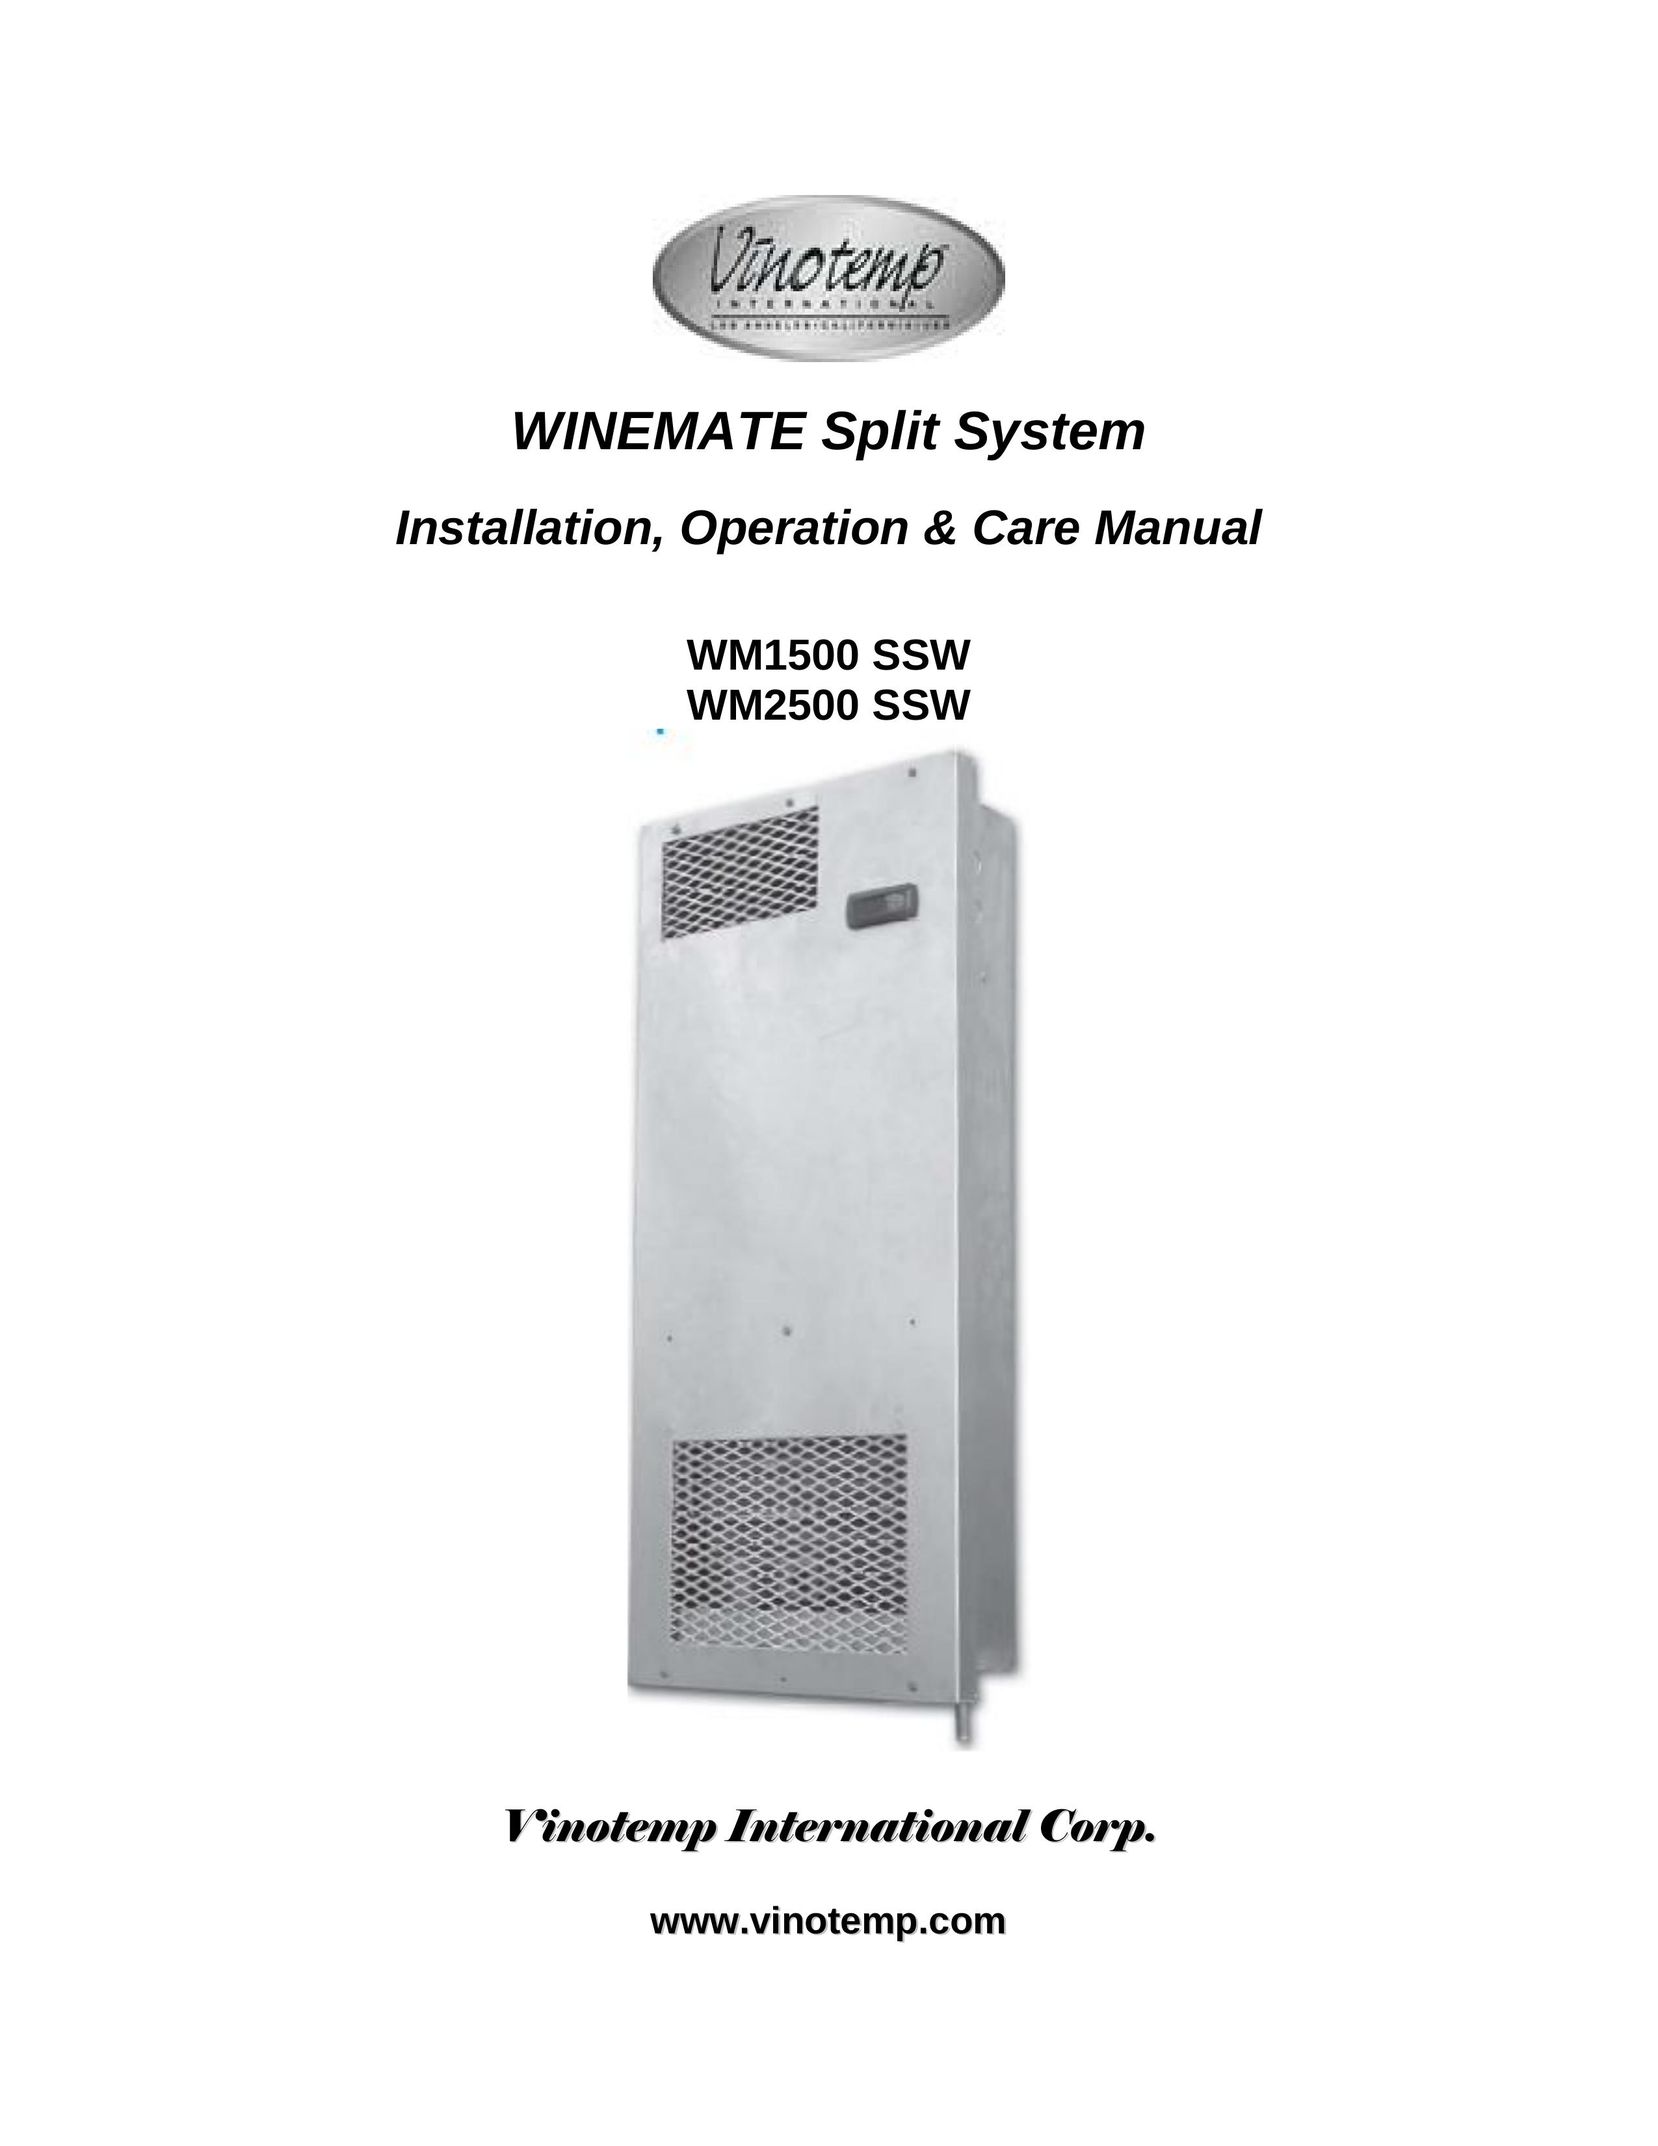 Vinotemp WM1500 SSW Air Conditioner User Manual